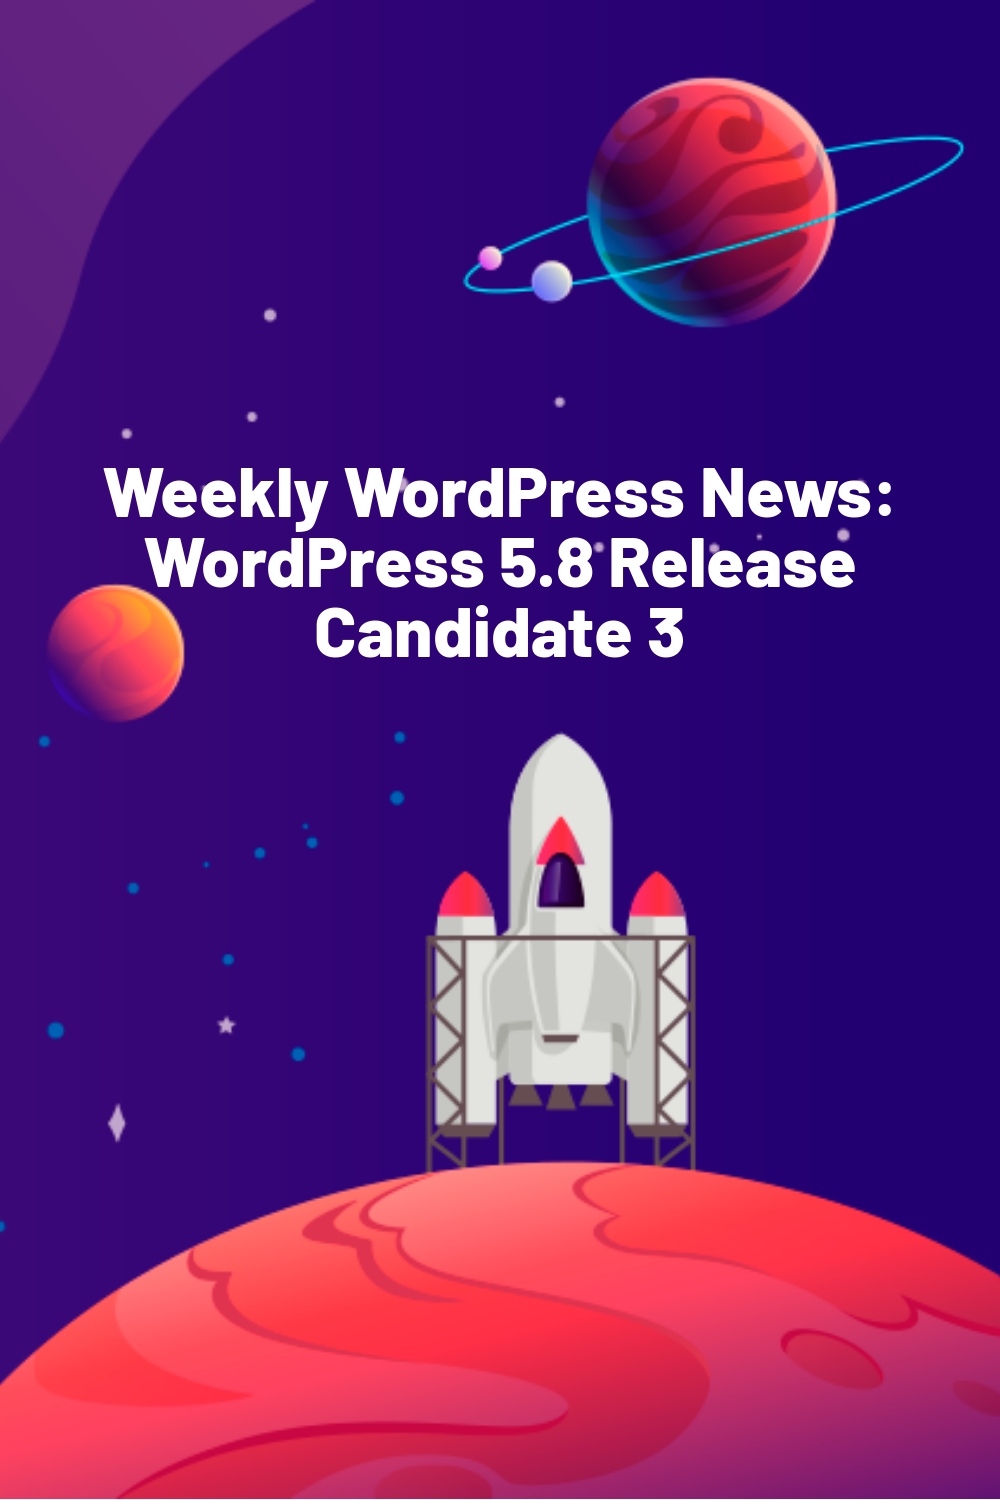 Weekly WordPress News: WordPress 5.8 Release Candidate 3